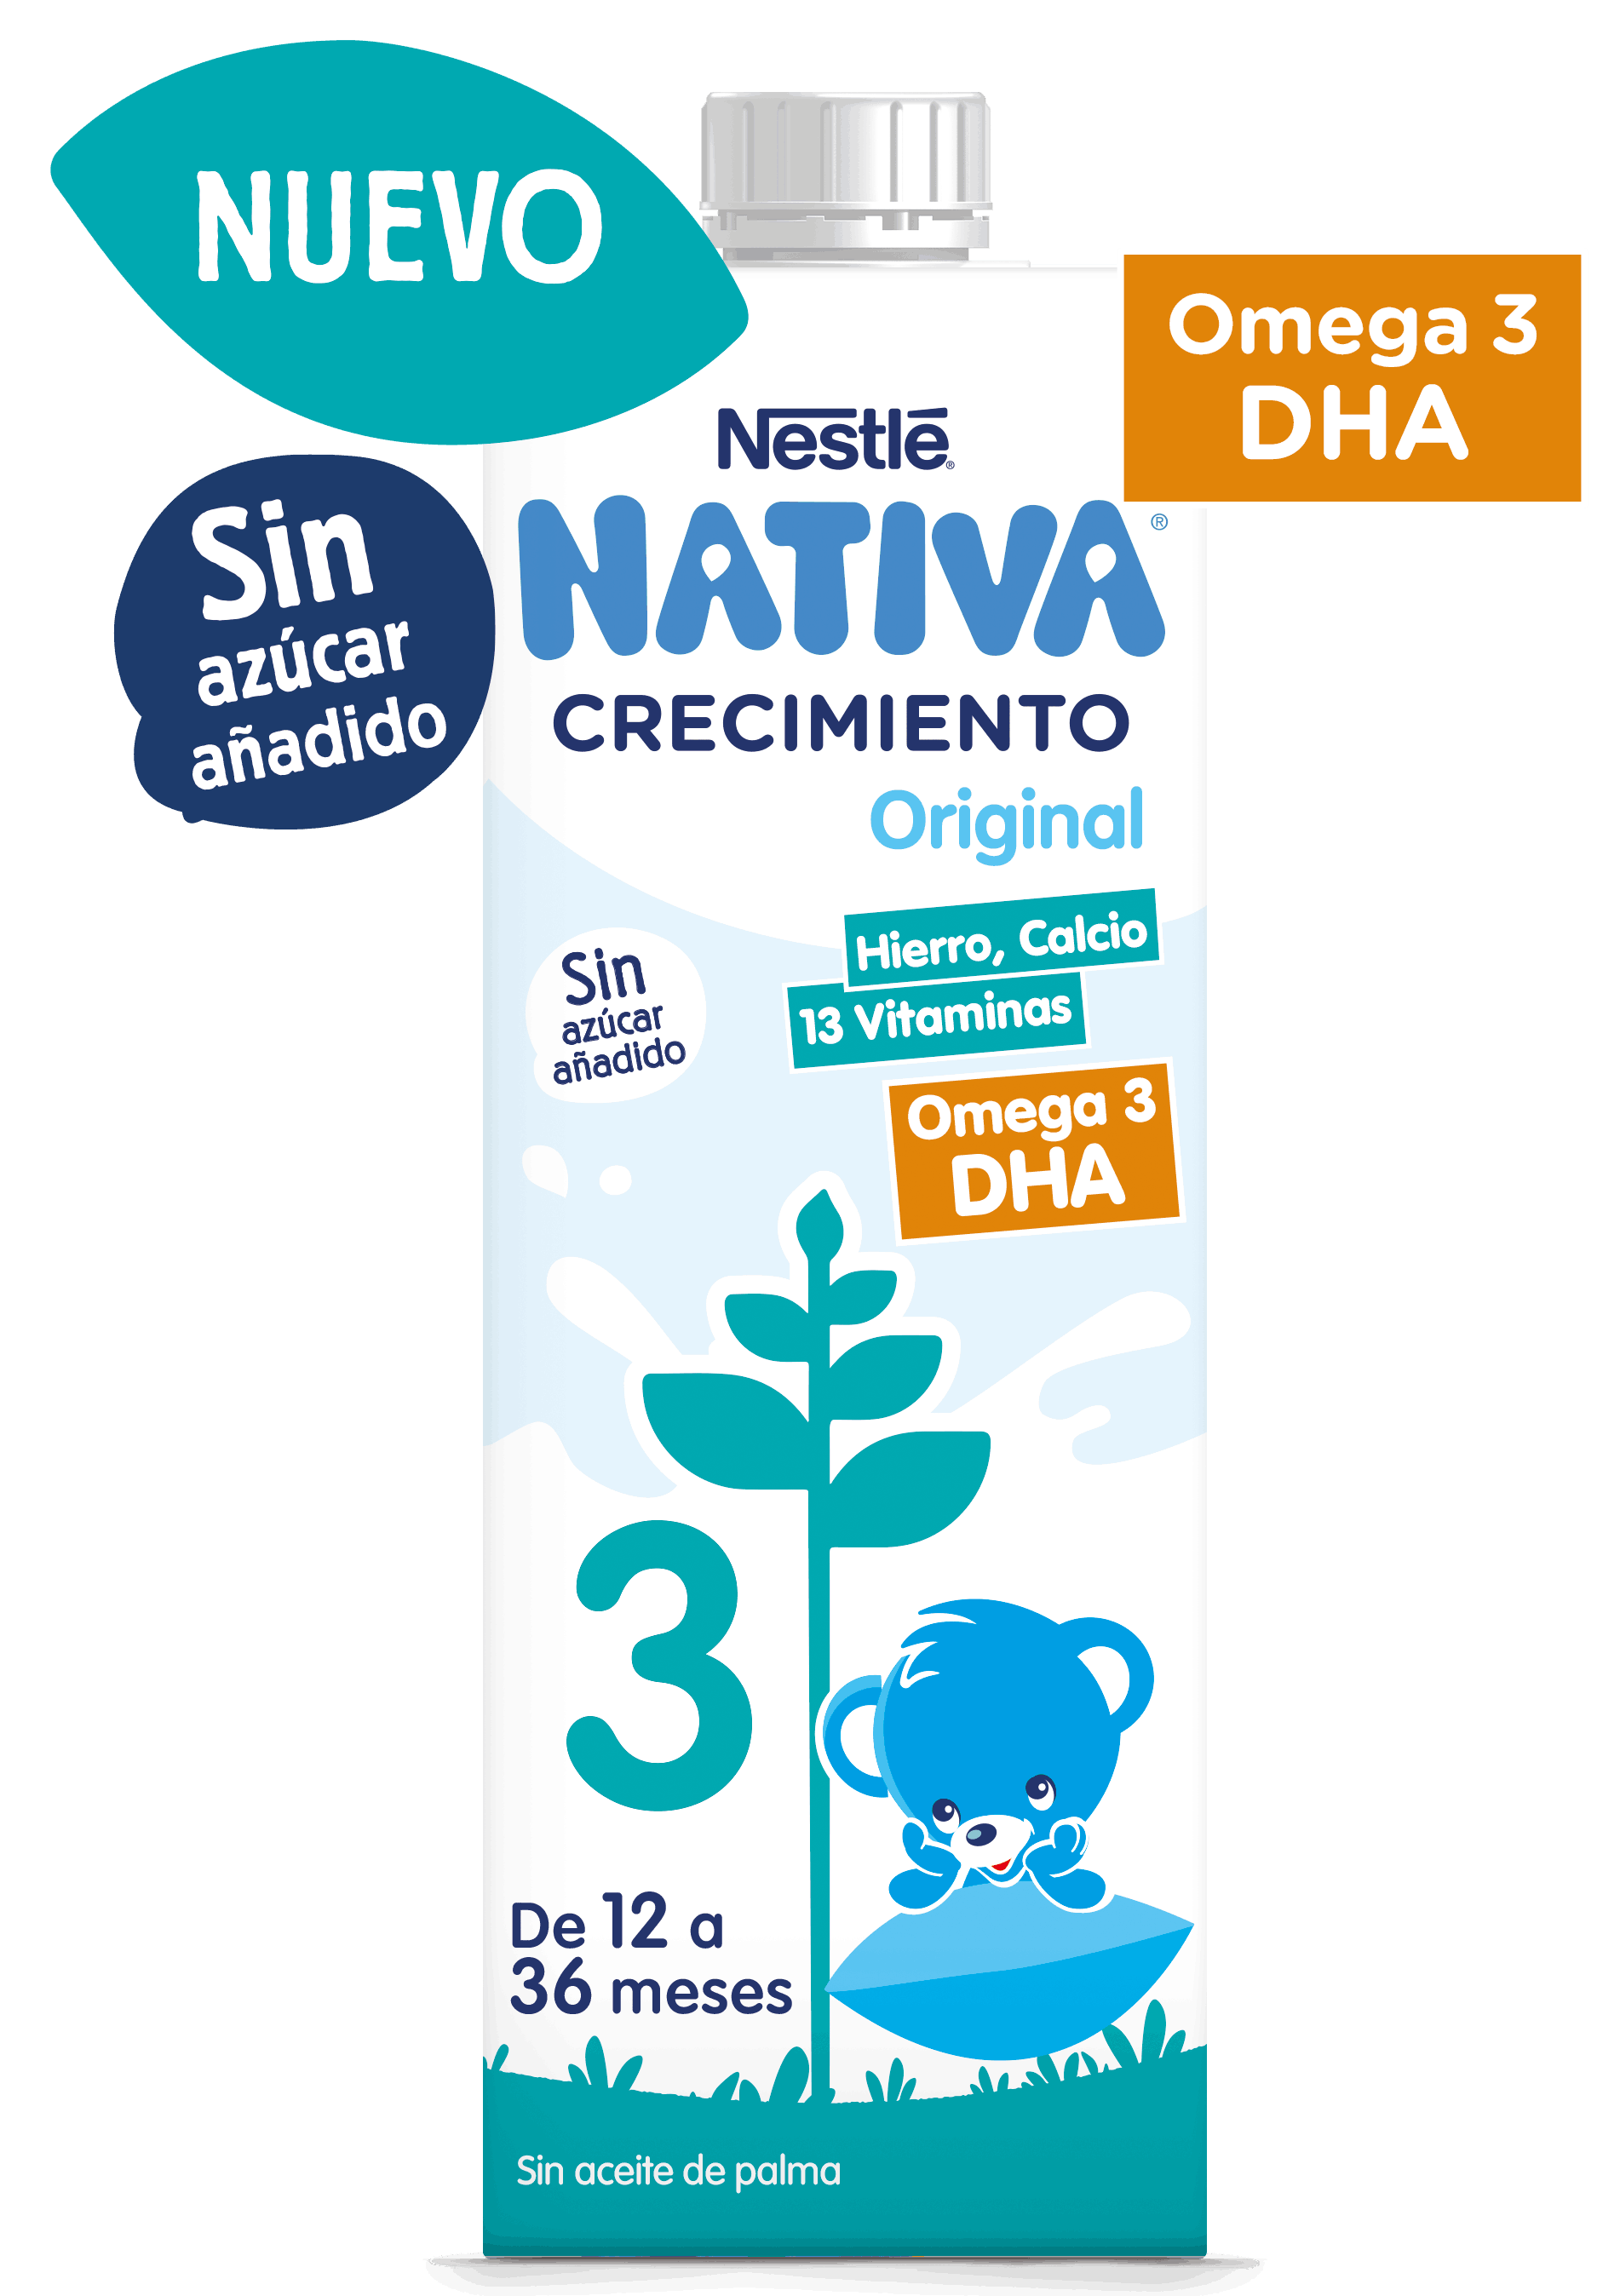 NATIVA 3 Growth Cereals 1L Nestlé